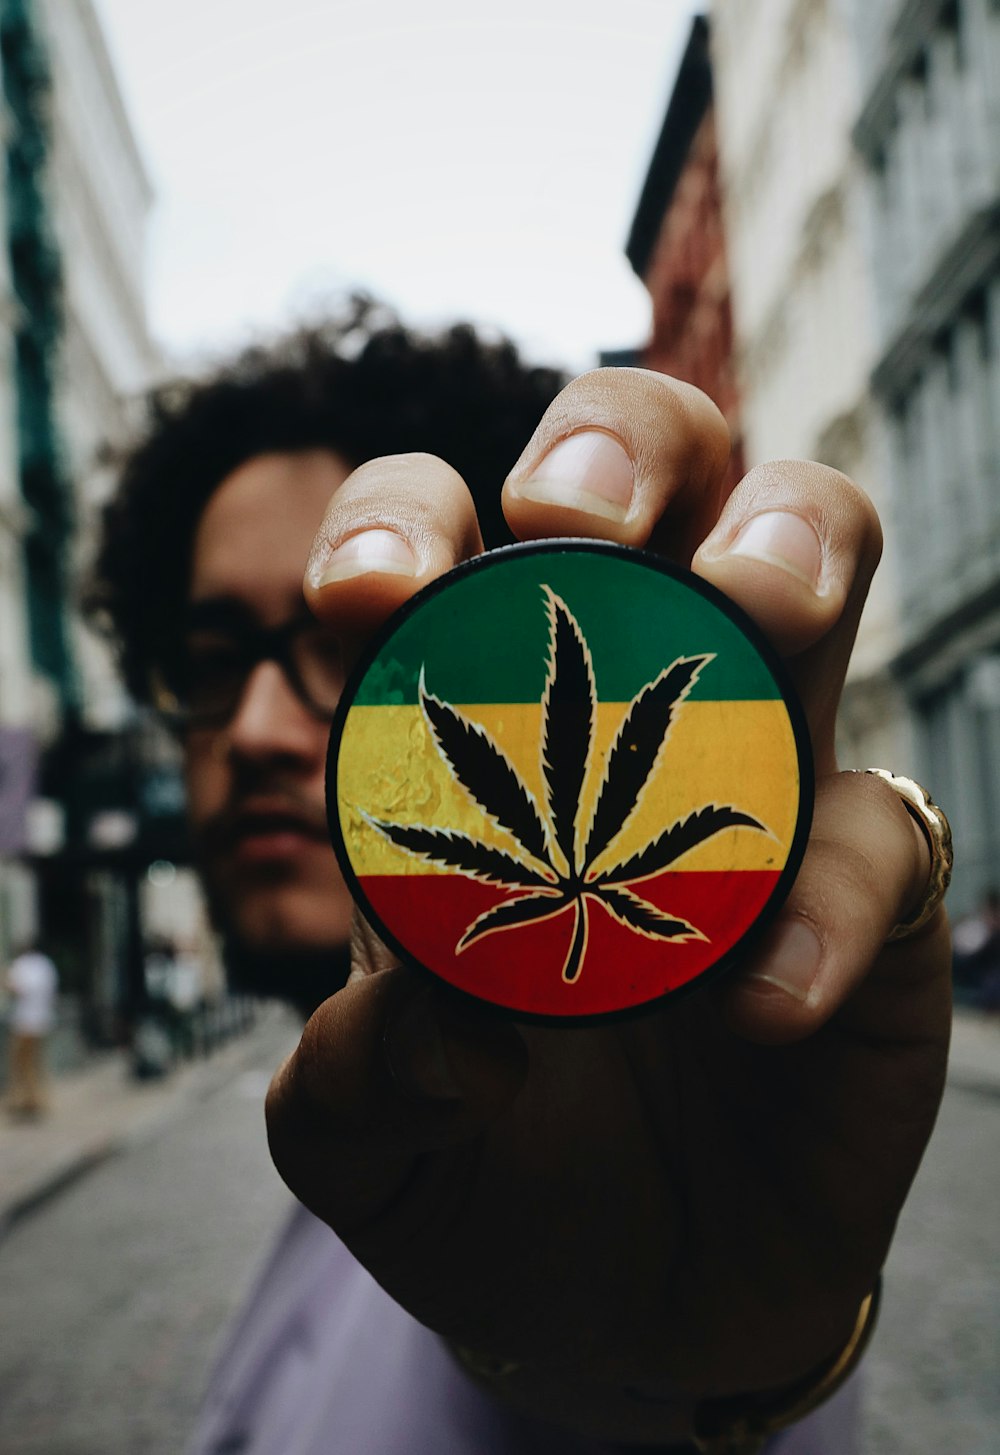 a man holding up a badge with a marijuana leaf on it